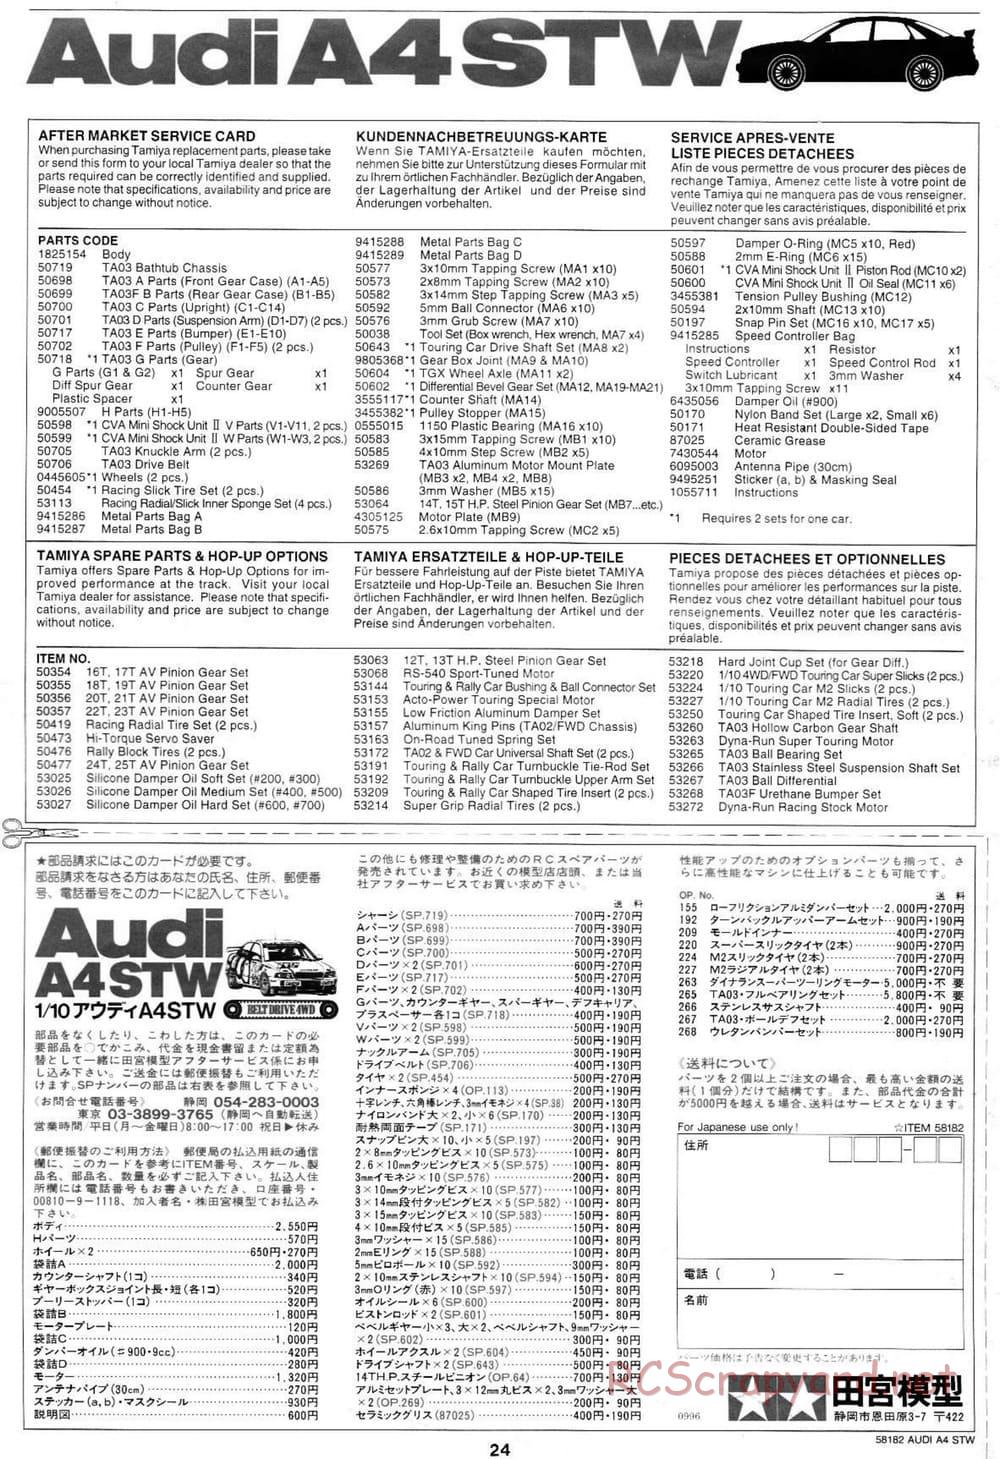 Tamiya - Audi A4 STW - TA-03F Chassis - Manual - Page 24